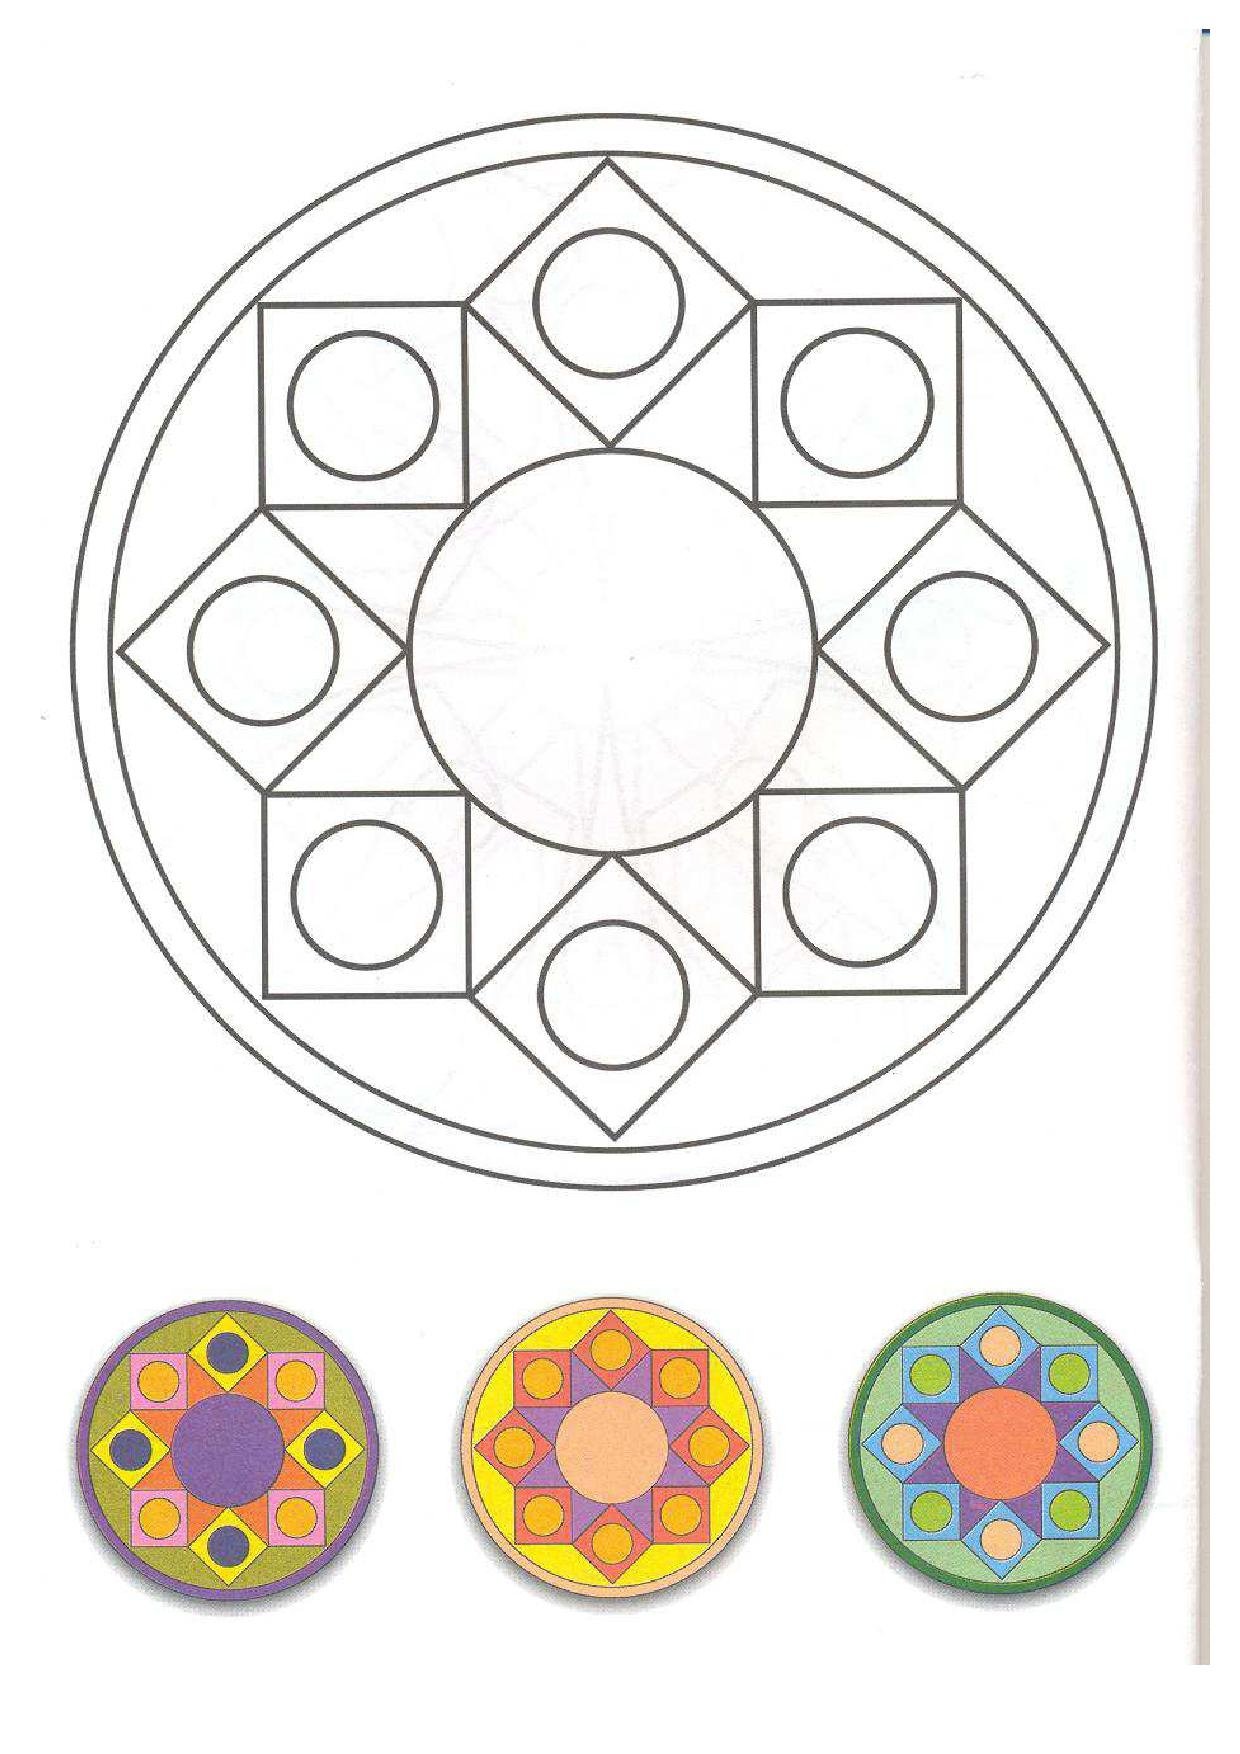 Орнамент в круге из геометрических фигур